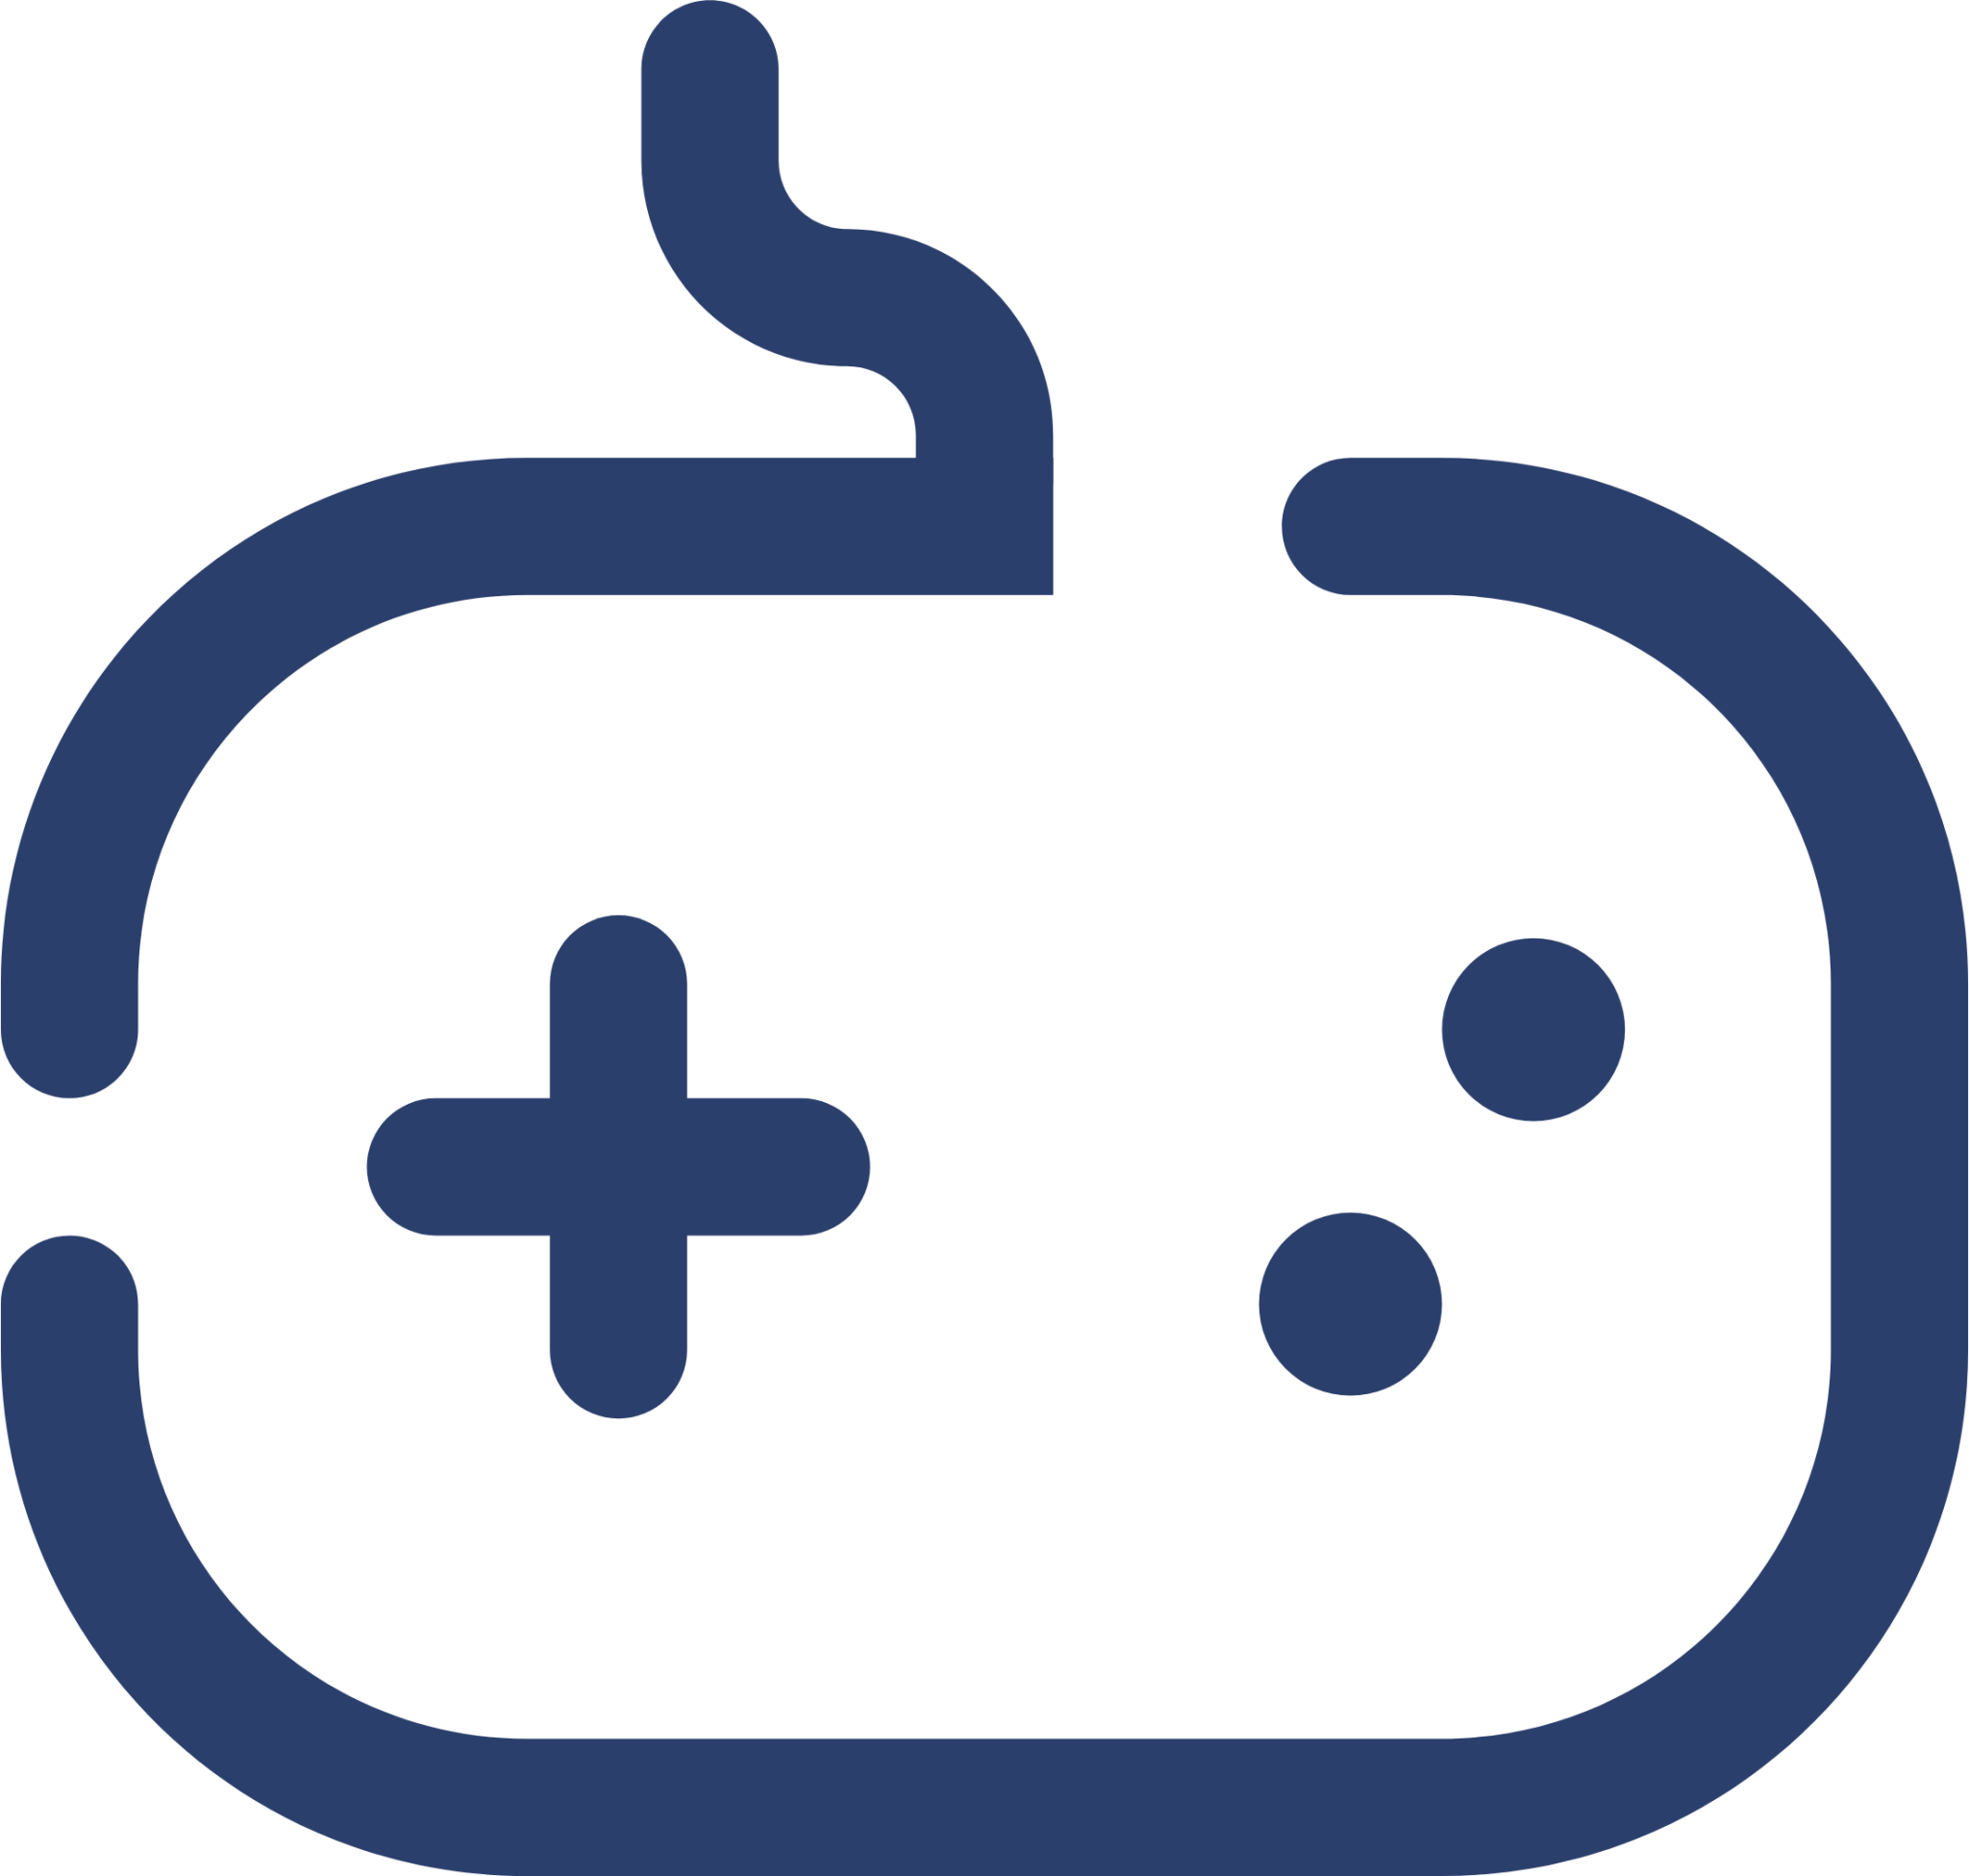 oldschool gamepad icon